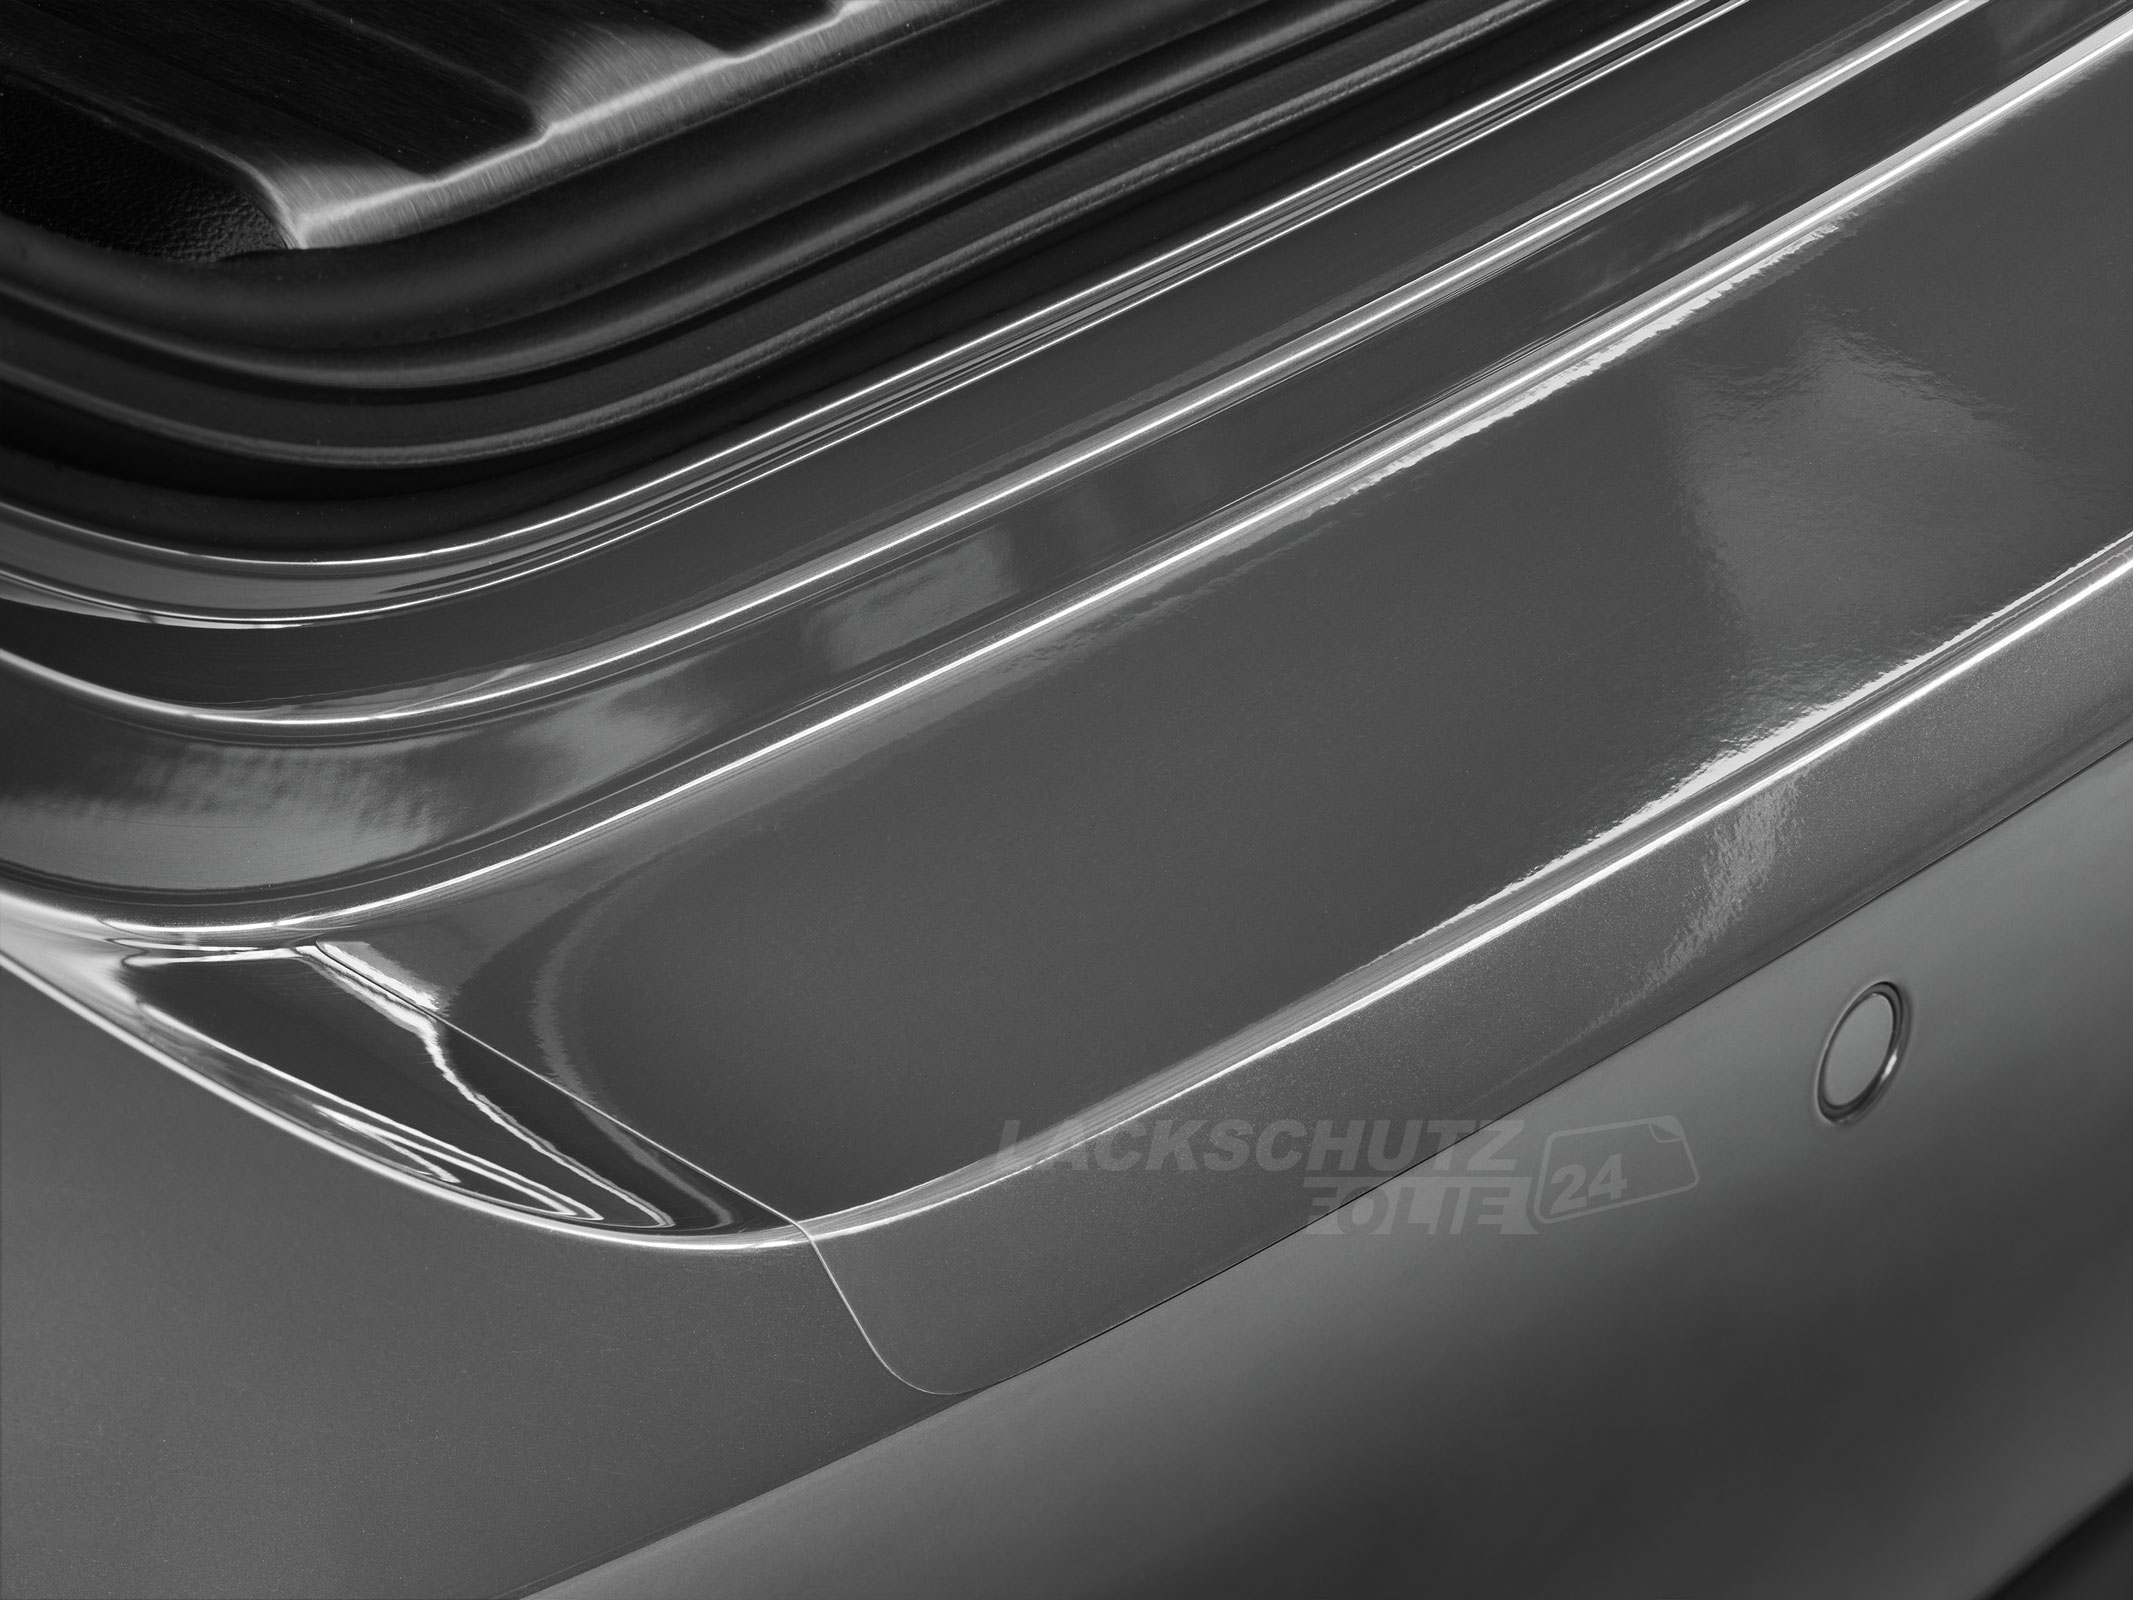 Ladekantenschutzfolie - Transparent Glatt Hochglänzend 240 µm stark für Peugeot 307 BJ 2001-2009